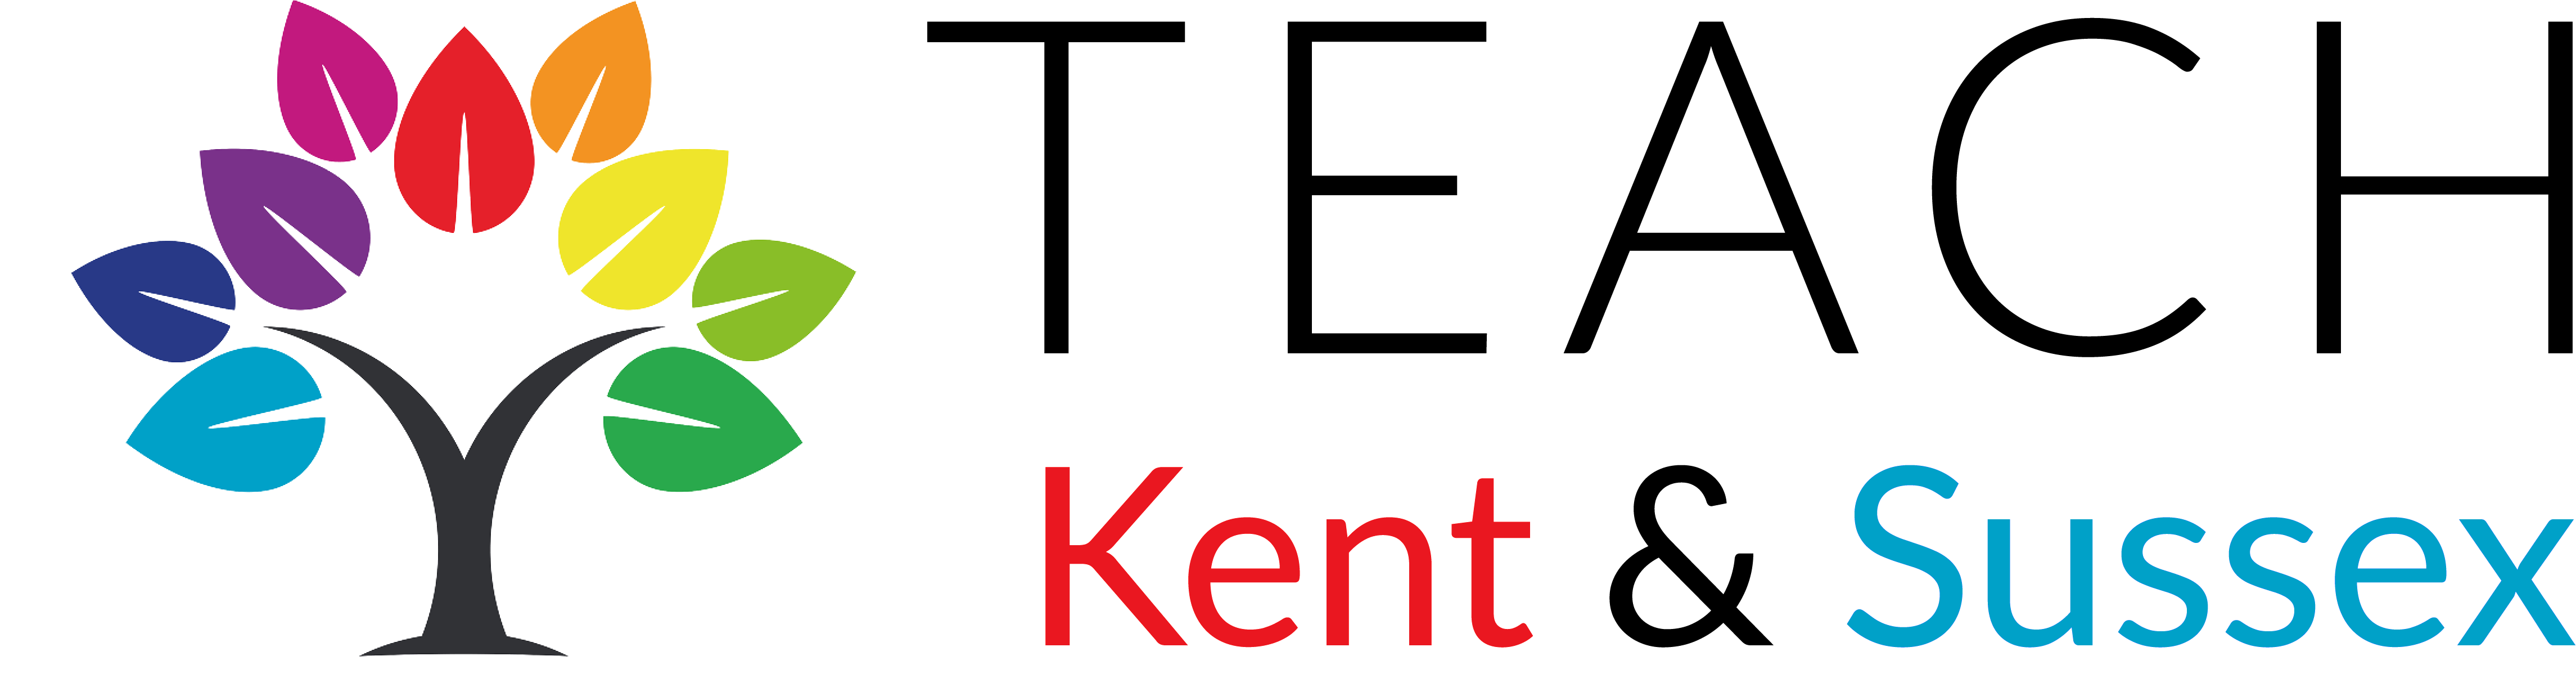 Teaching Logo - Teach Kent and Sussex